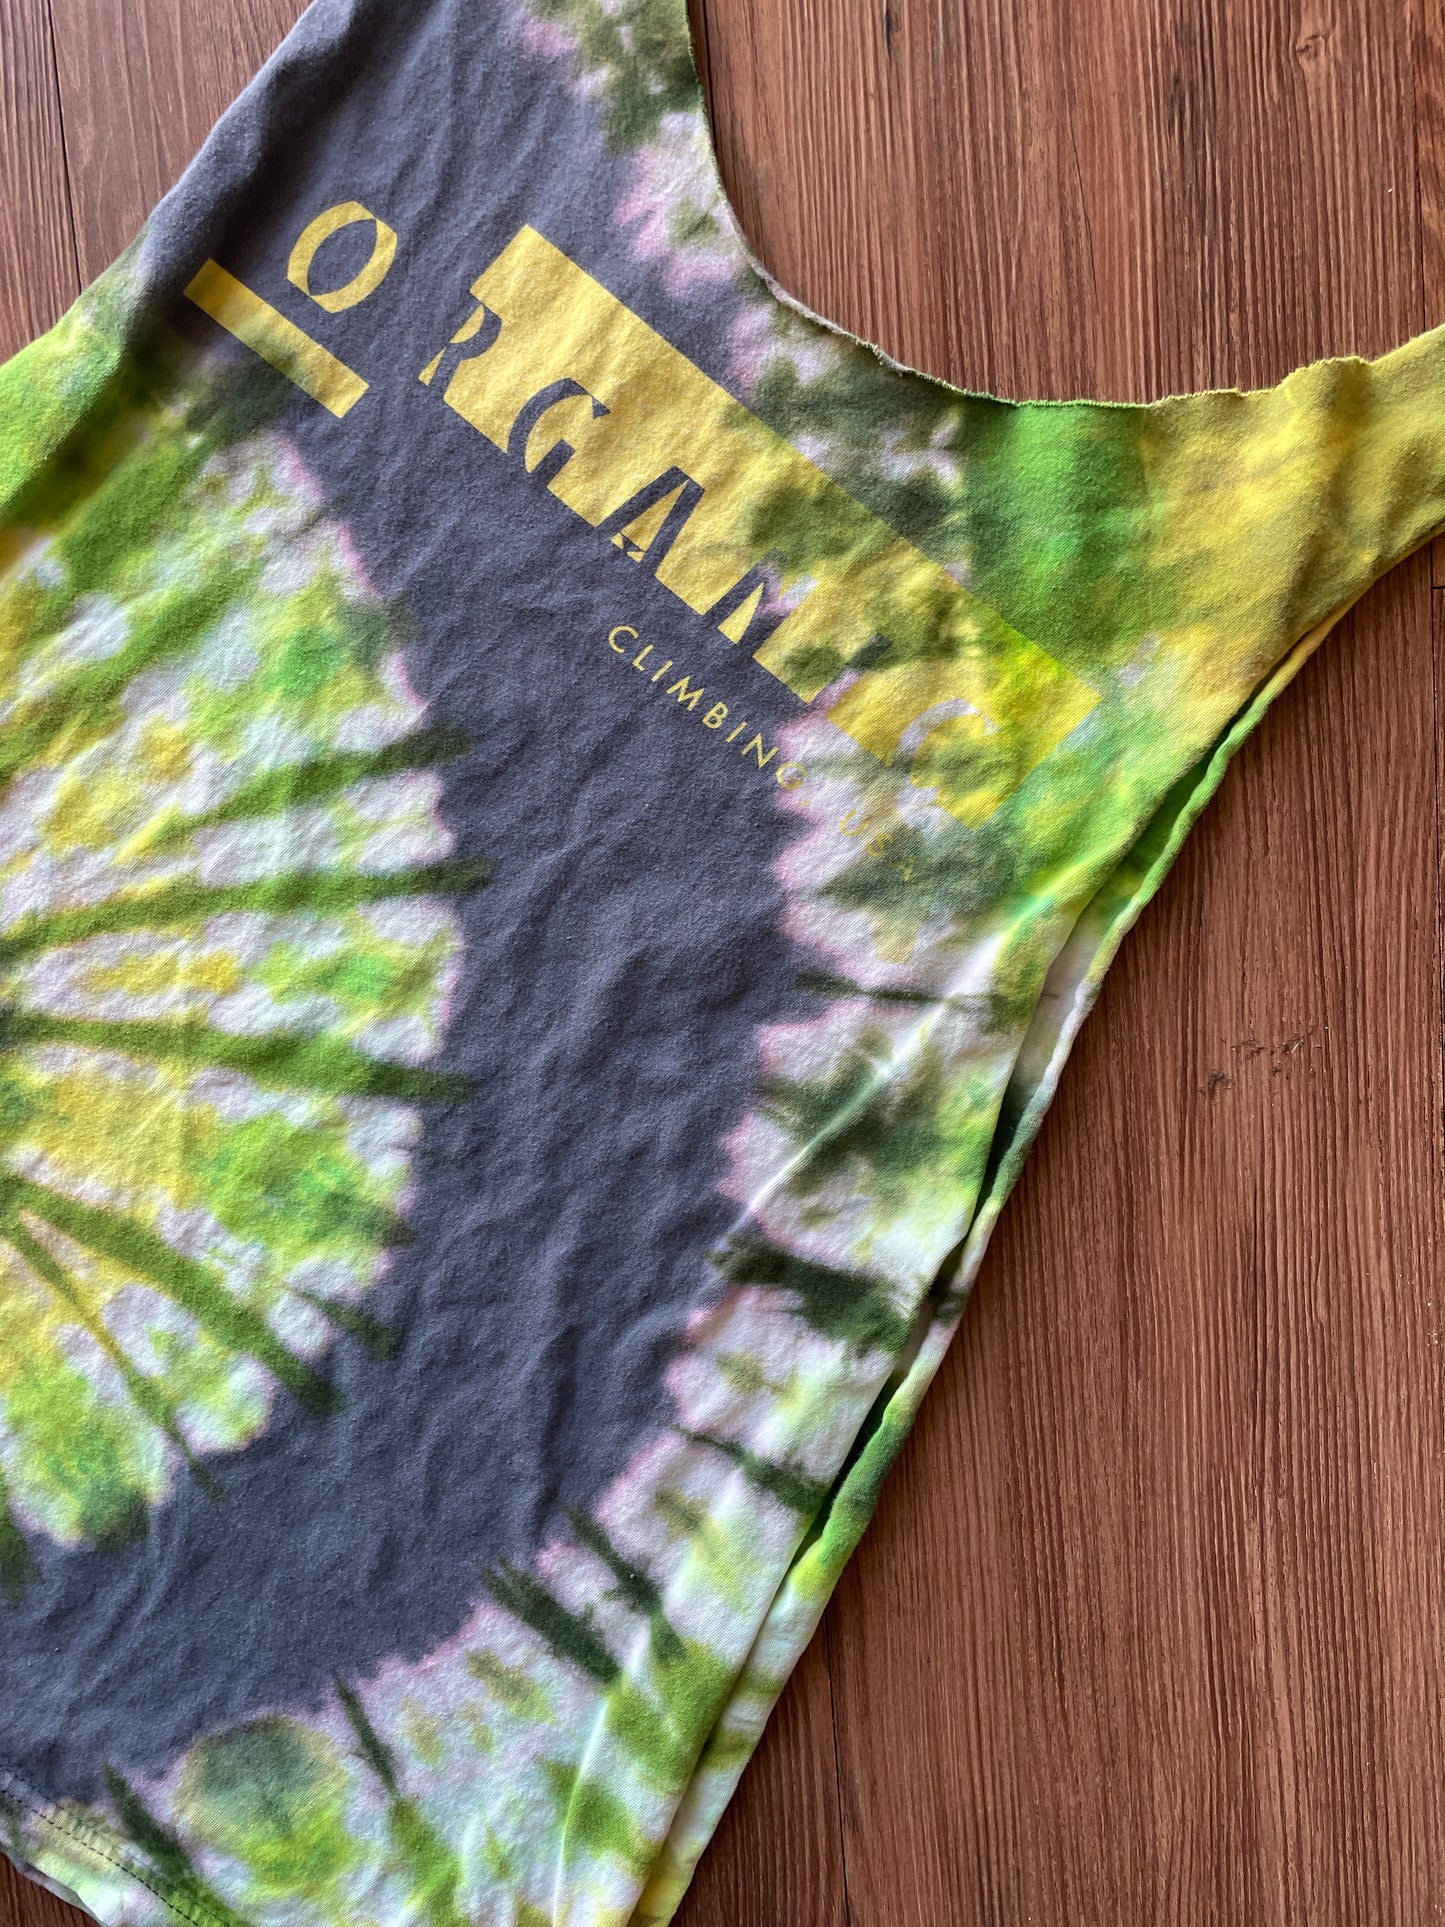 SMALL Men’s Organic Climbing Handmade Tie Dye Cut-Off T-Shirt | One-Of-a-Kind Gray, Green, and Yellow Tank Top